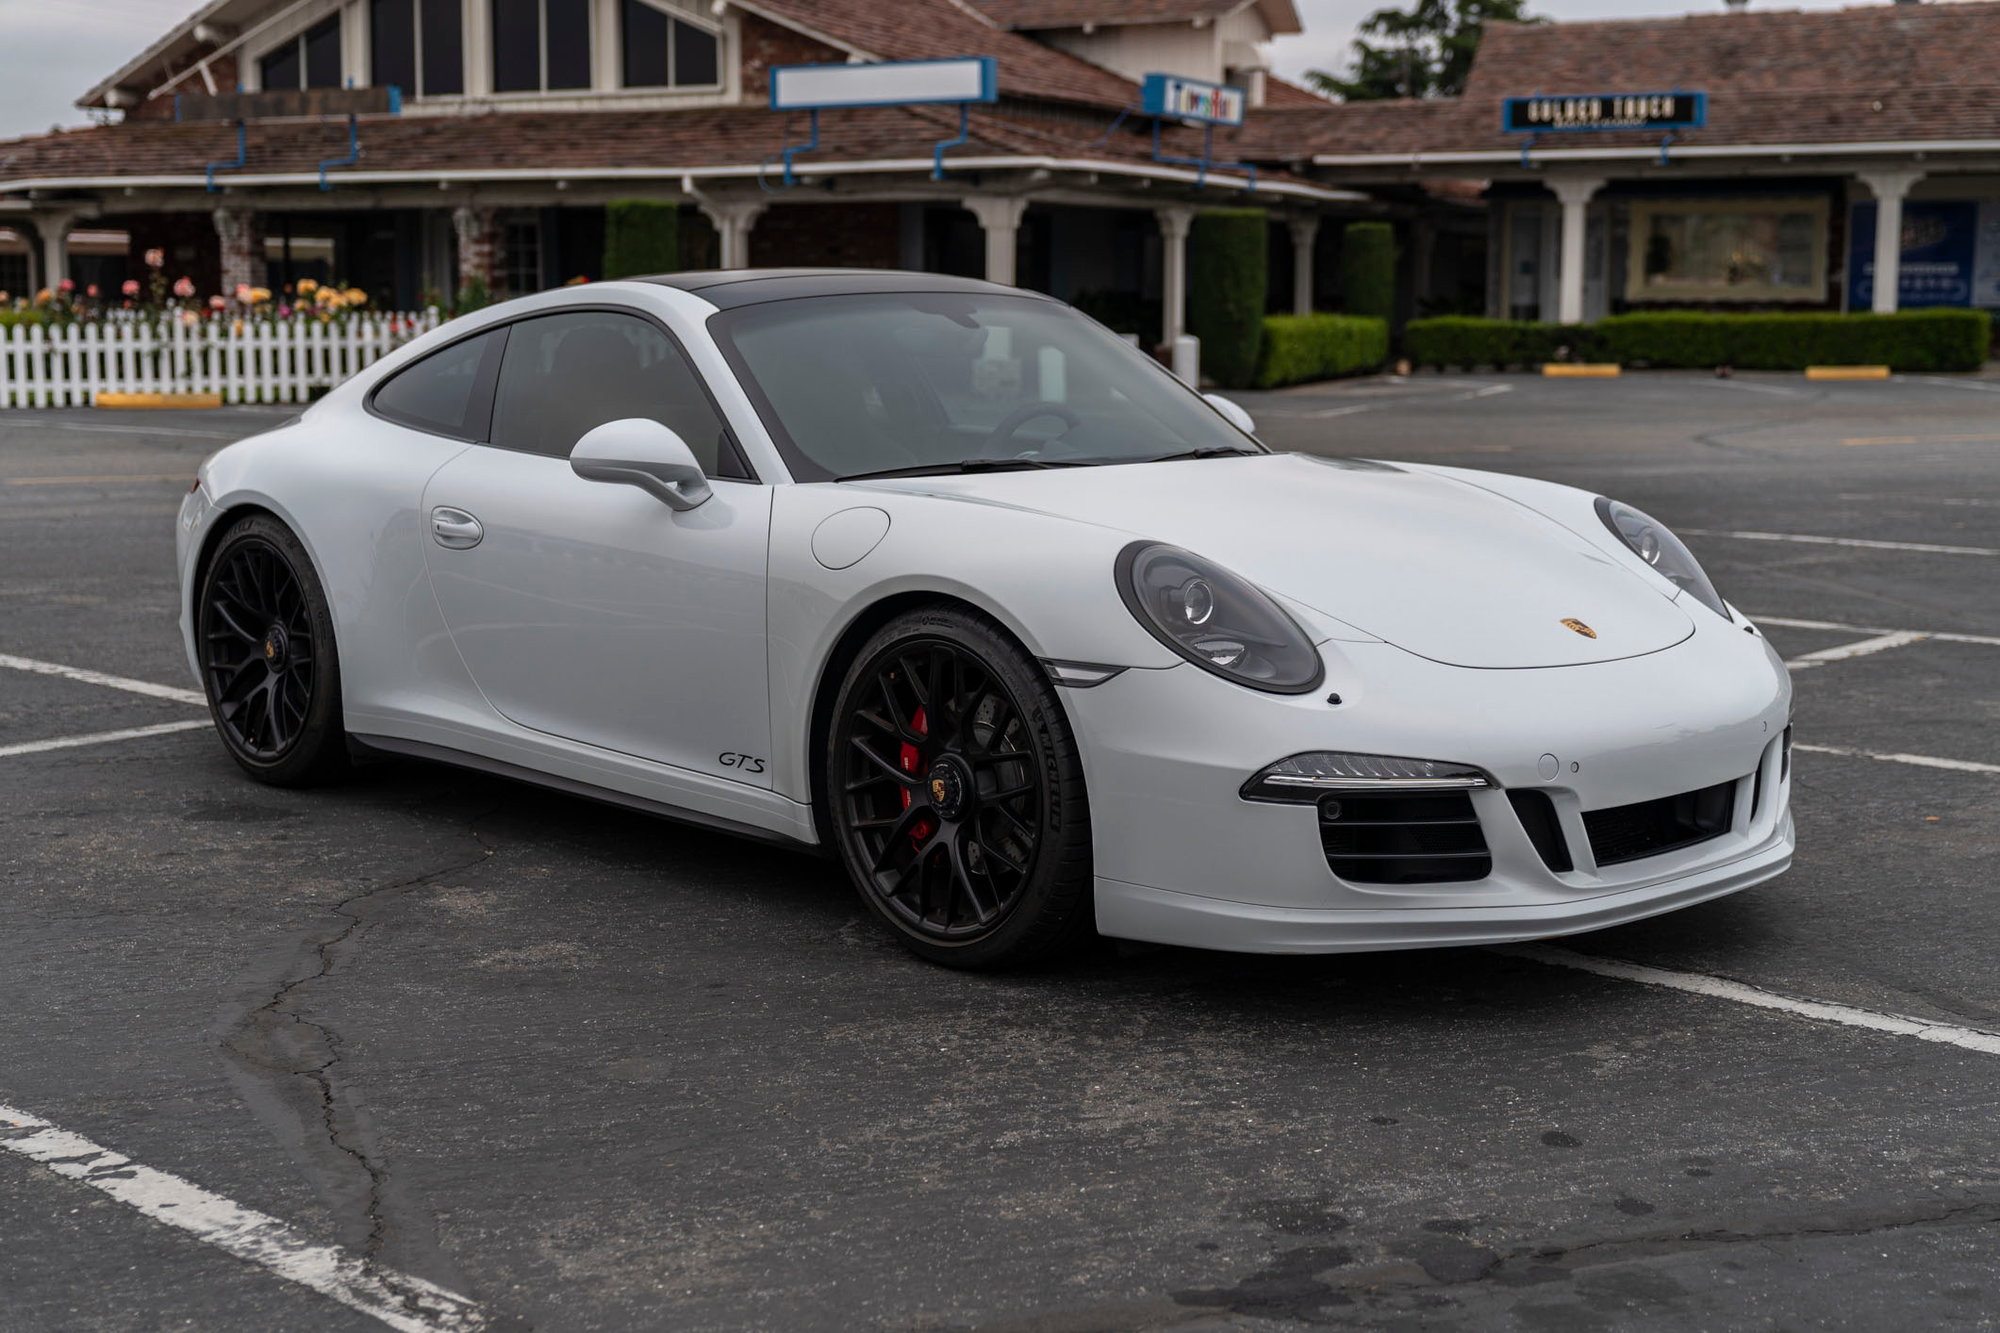 2015 Porsche 911 - 2015 911 GTS-25,084 miles, stunning car!!!  $115,000 OBO - Used - San Jose, CA 95124, United States